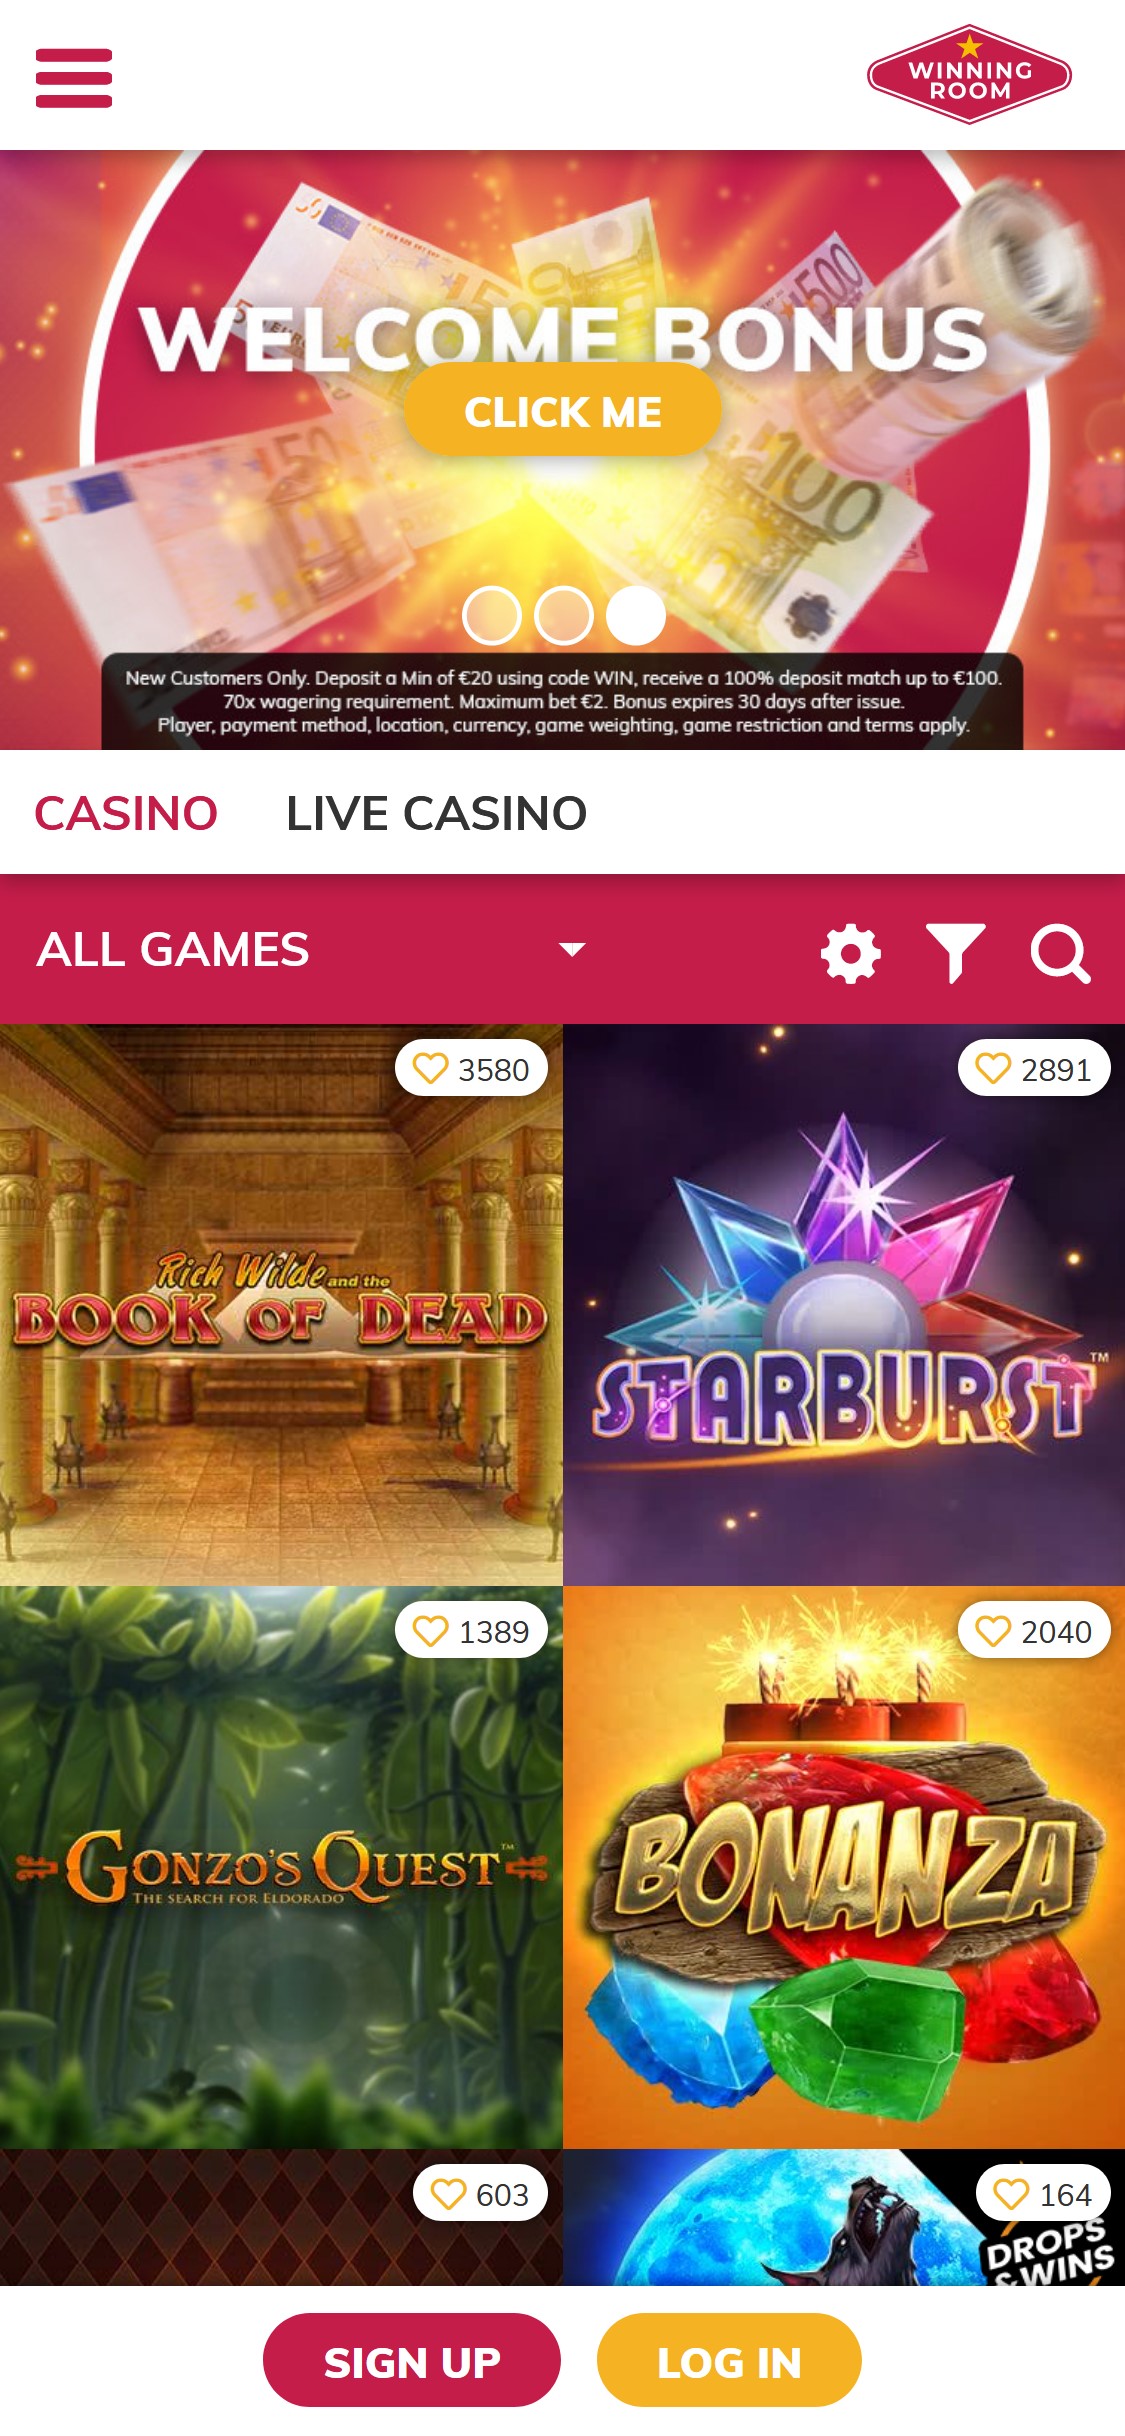 Winning Room Casino Mobile Review